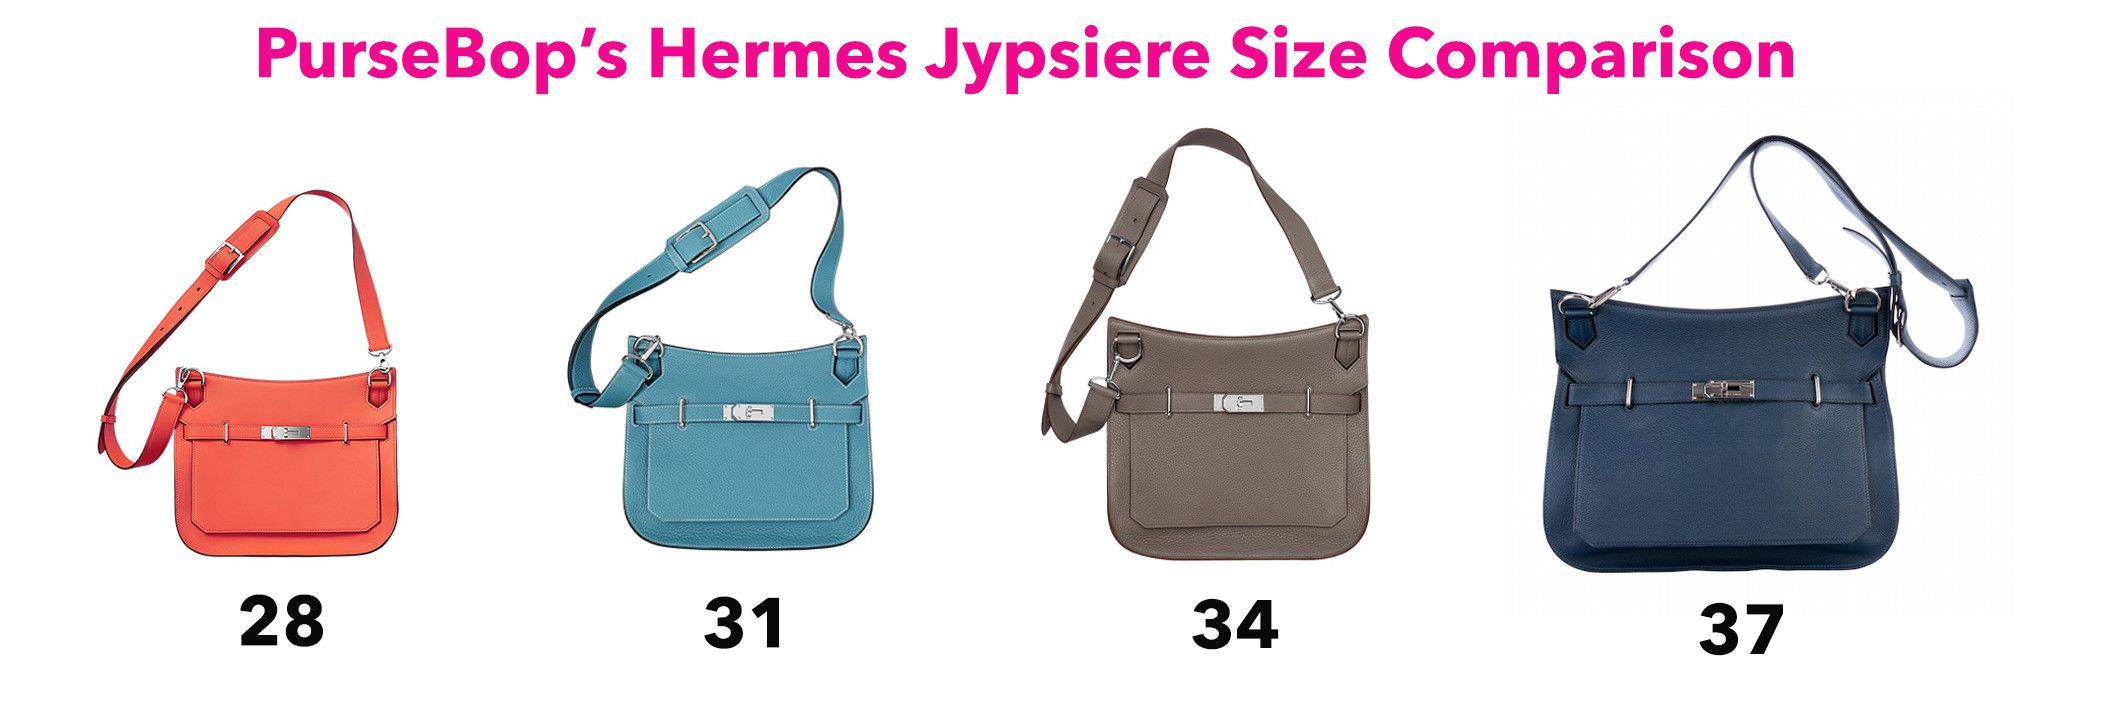 Hermès Jean Jypsiere